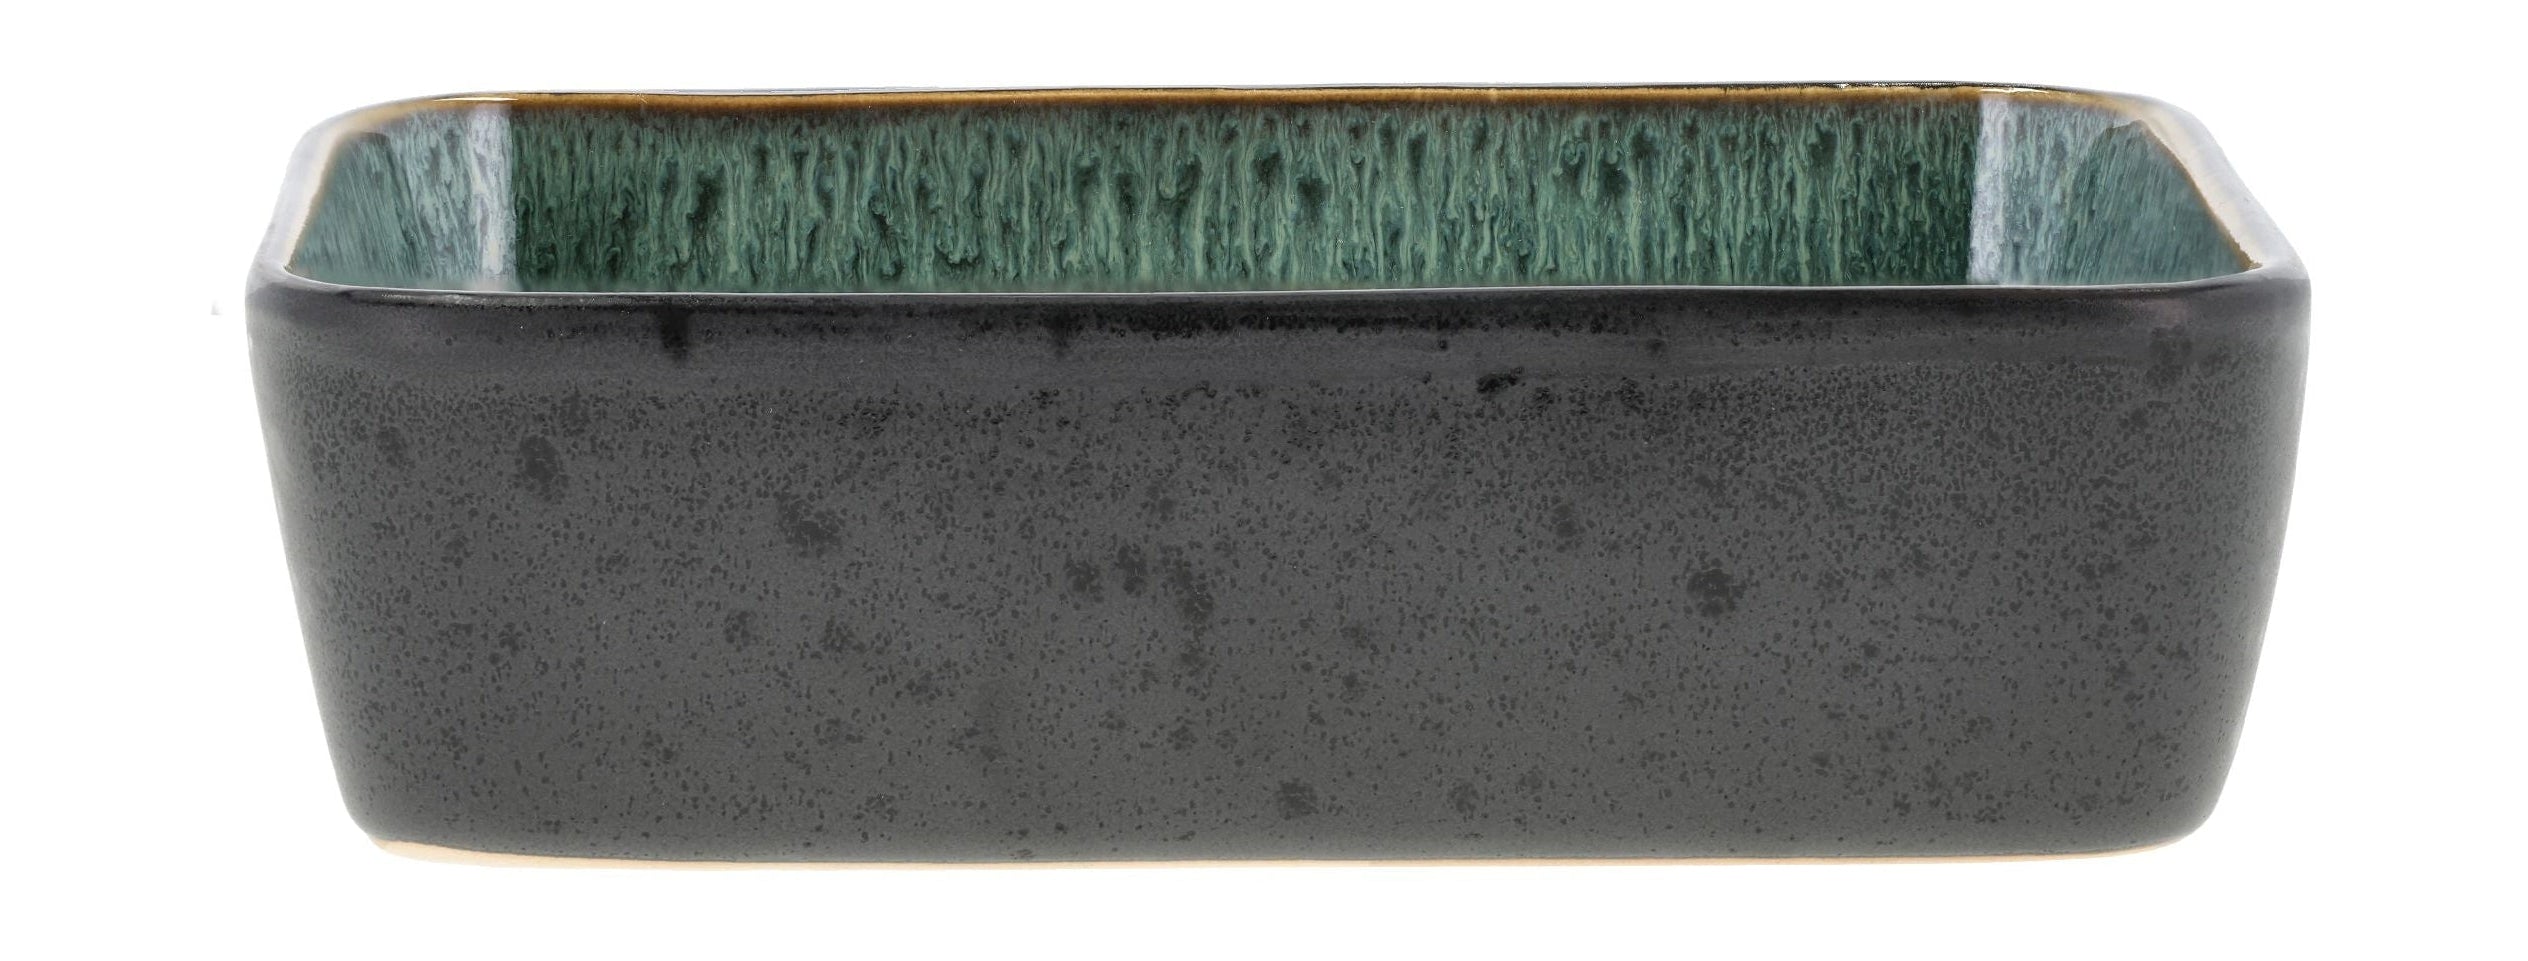 Bitz skål rektangulär 19 x 14 x 5,3 cm, svart/grön